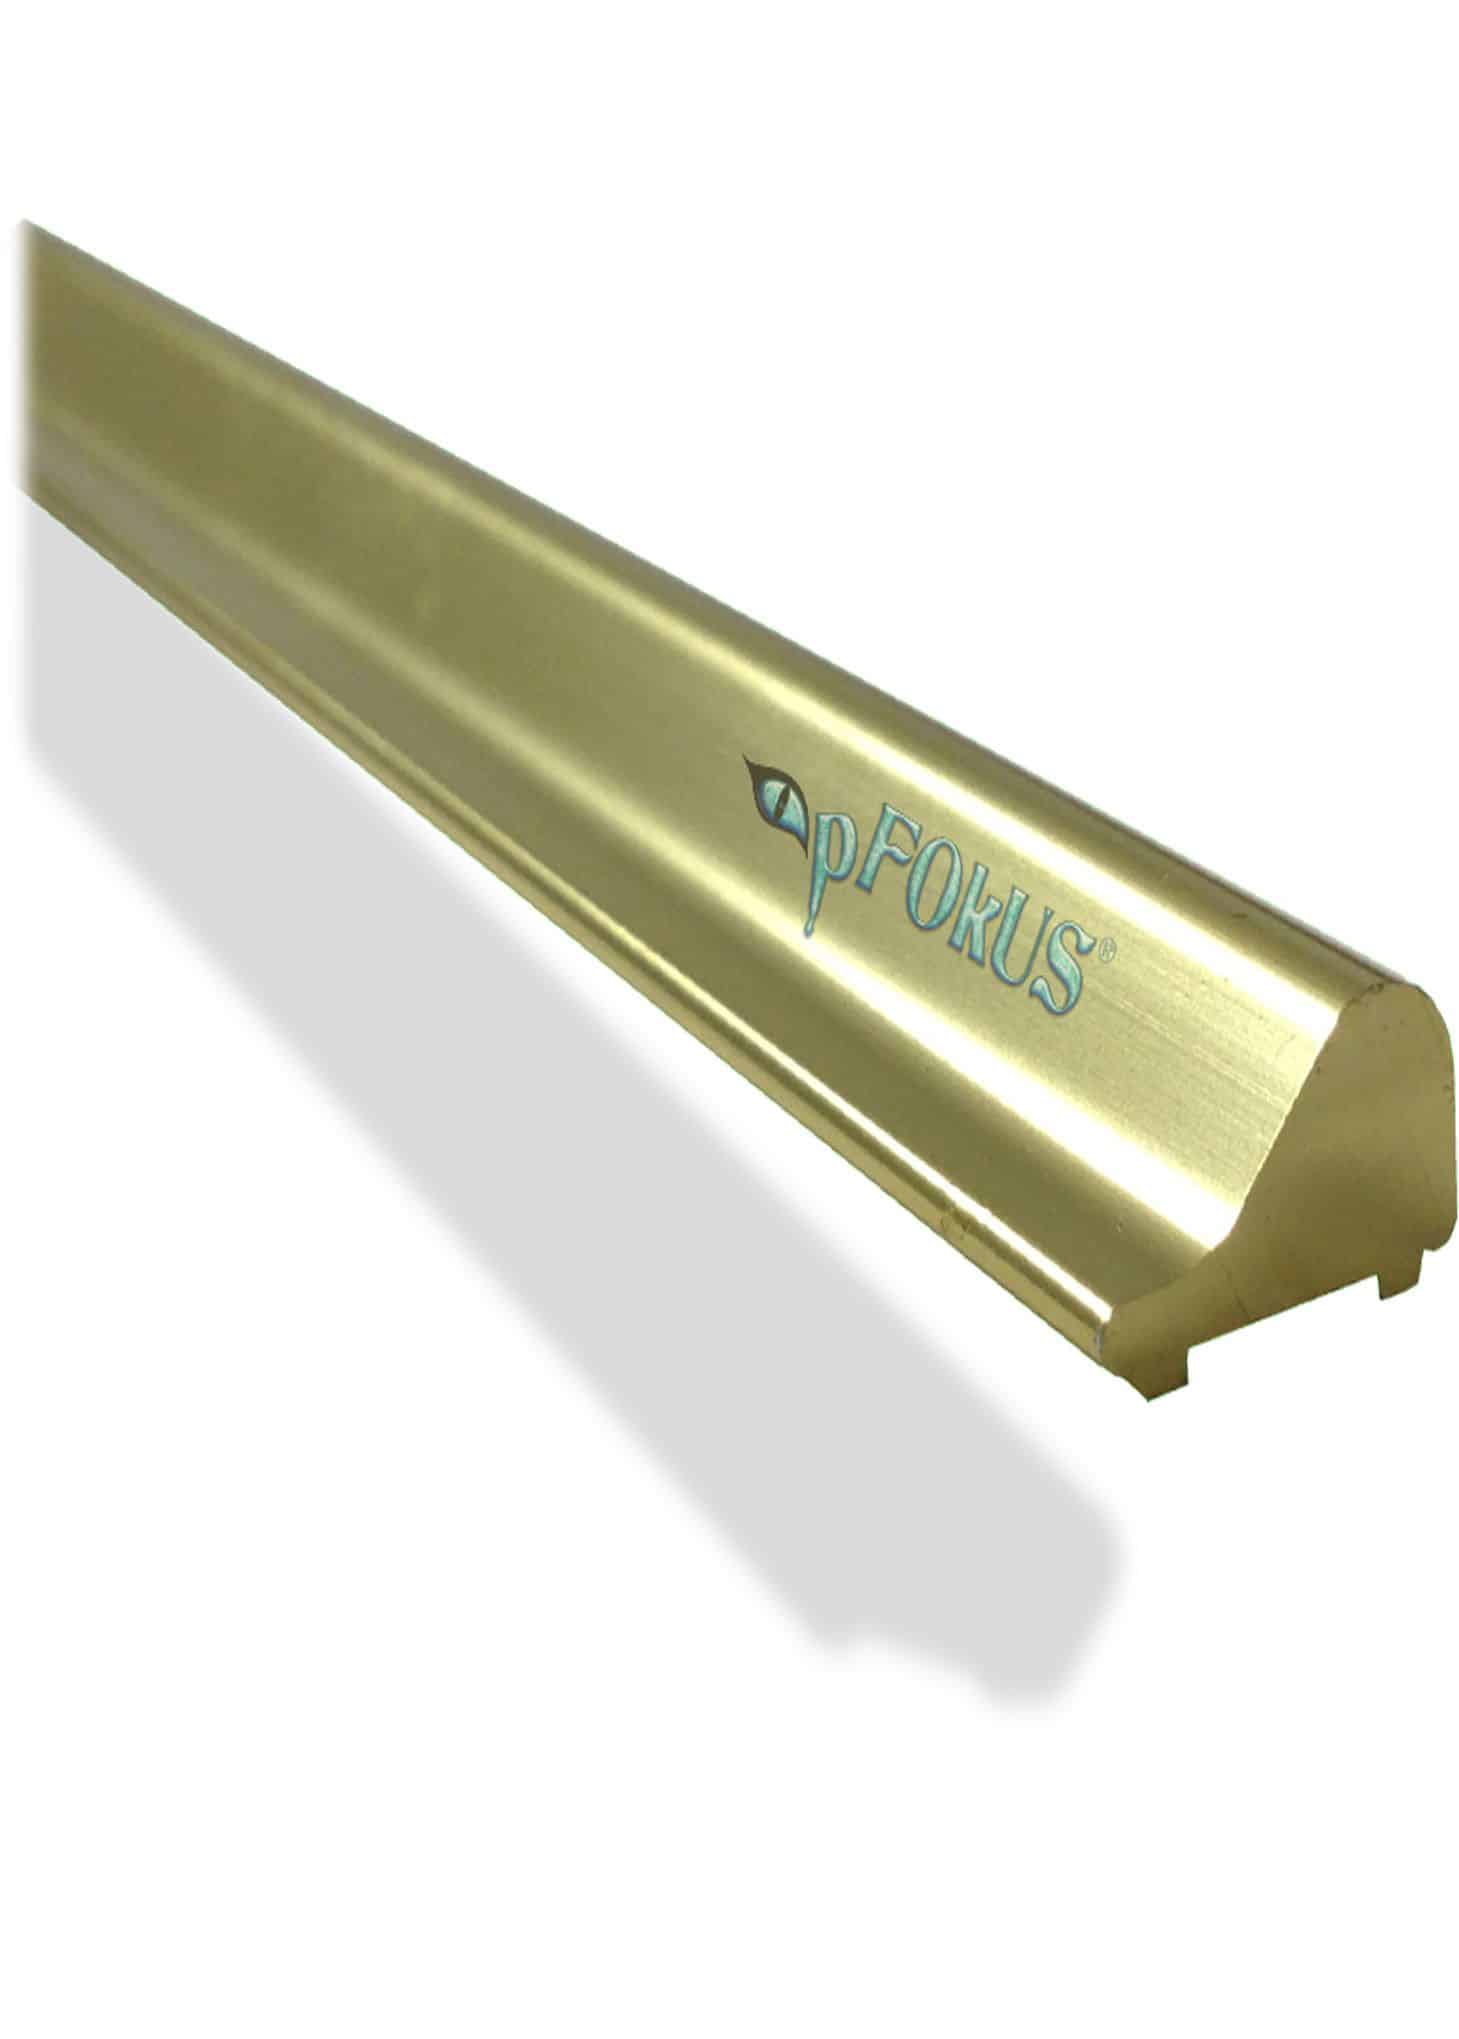 DS202 Shower Glass Door Metal threshold leaking Seal Wipe Replacement Quality pFOkUS